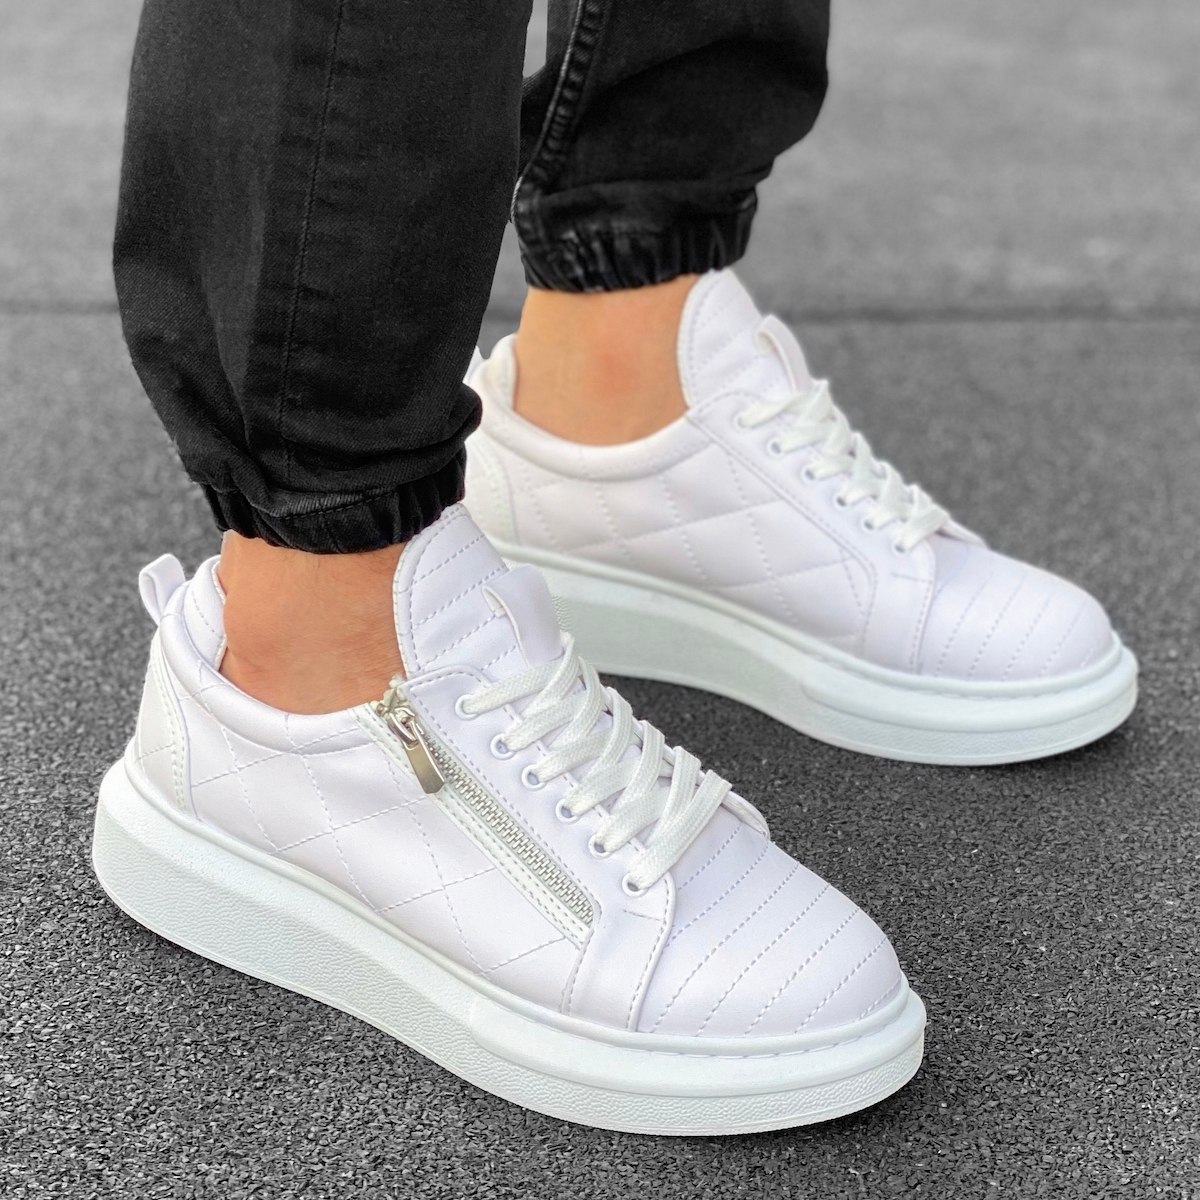 Men’s Stitch Zipper Sneakers Shoes White